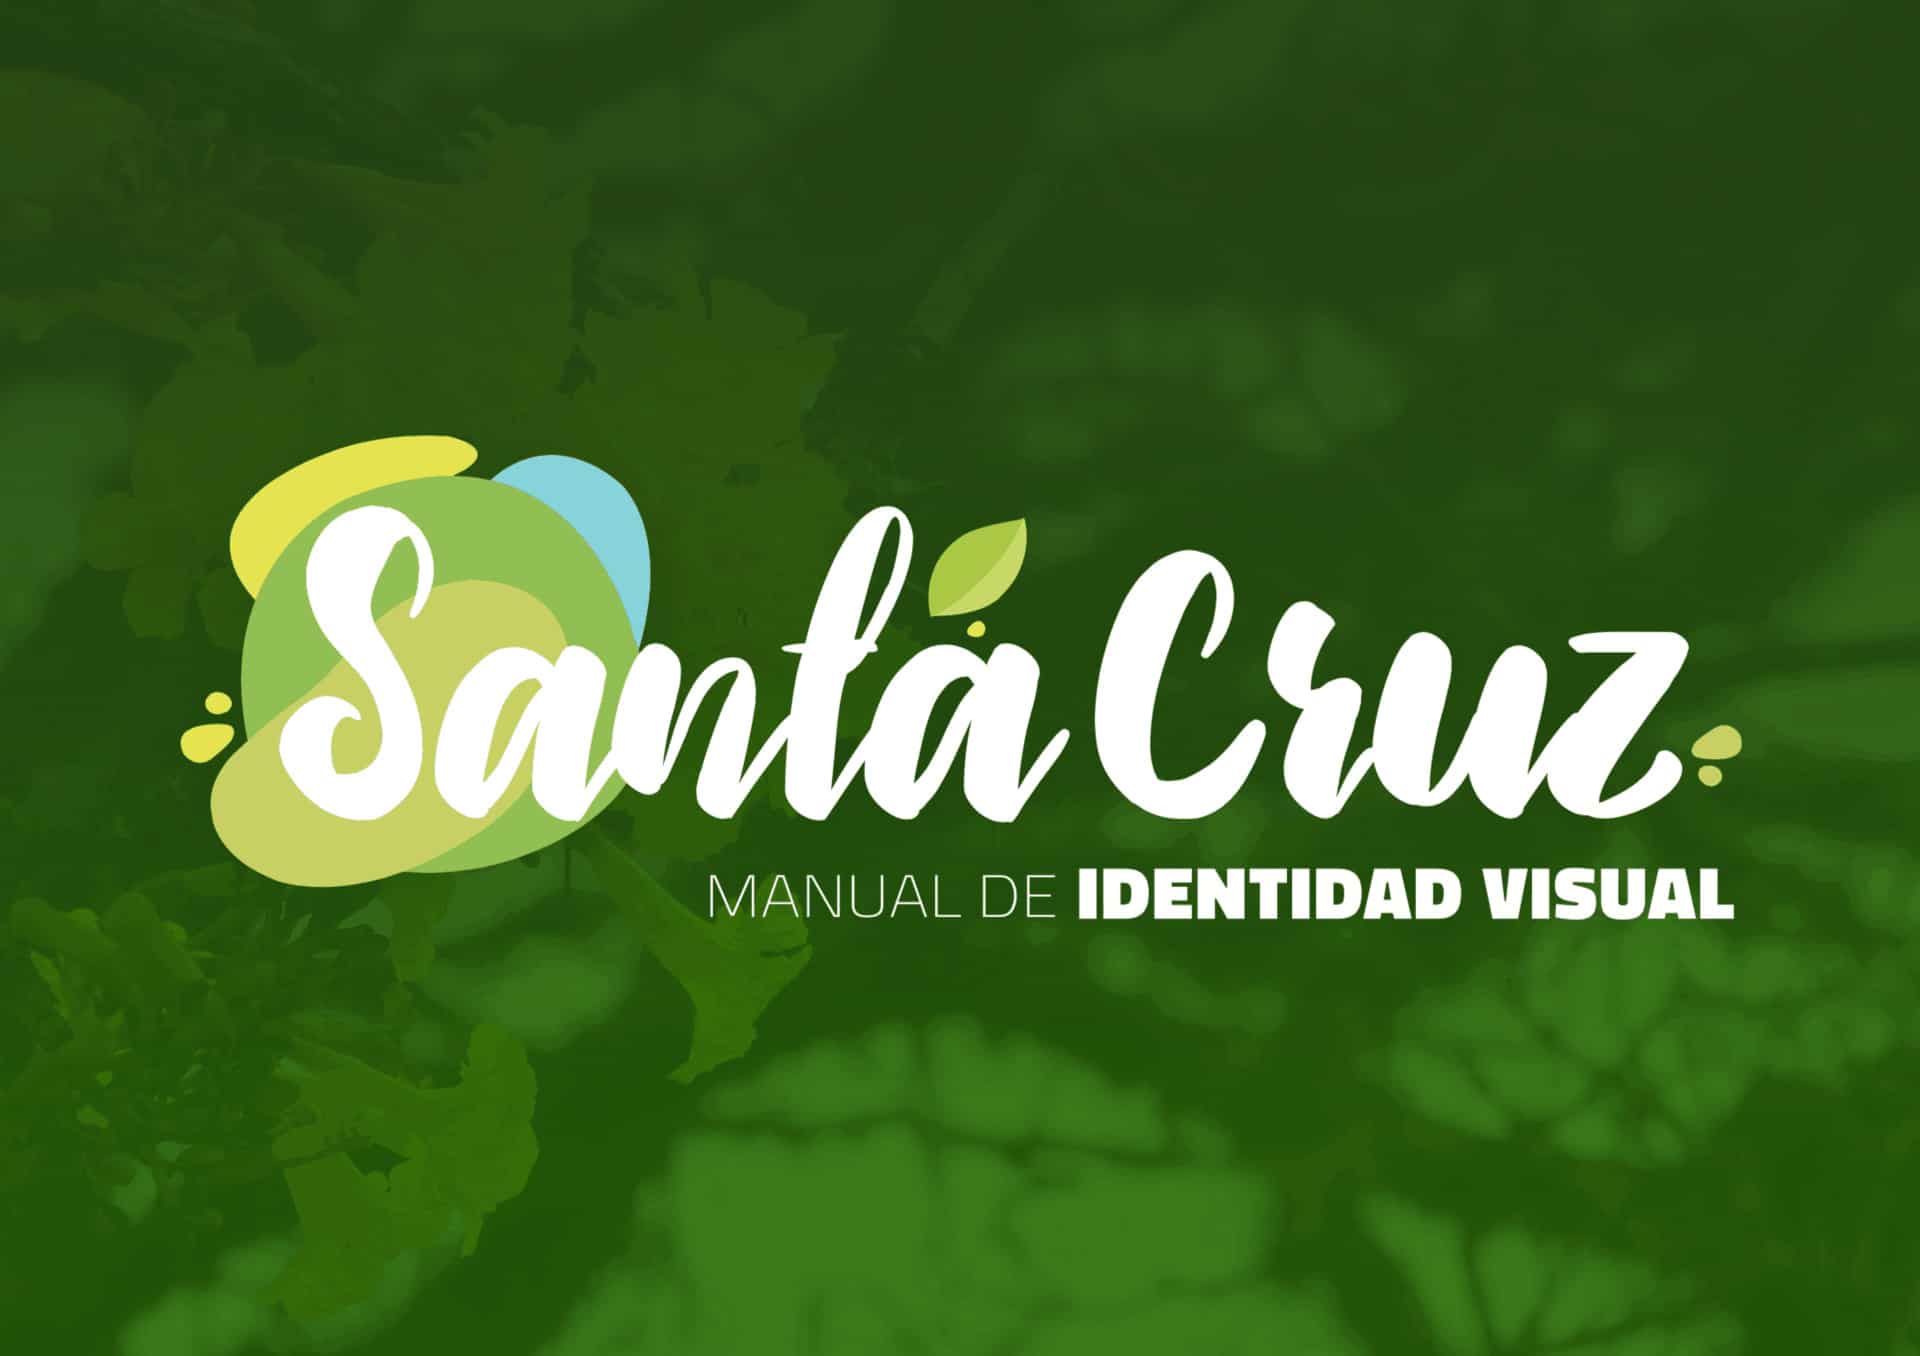 City Brand - Santa Cruz